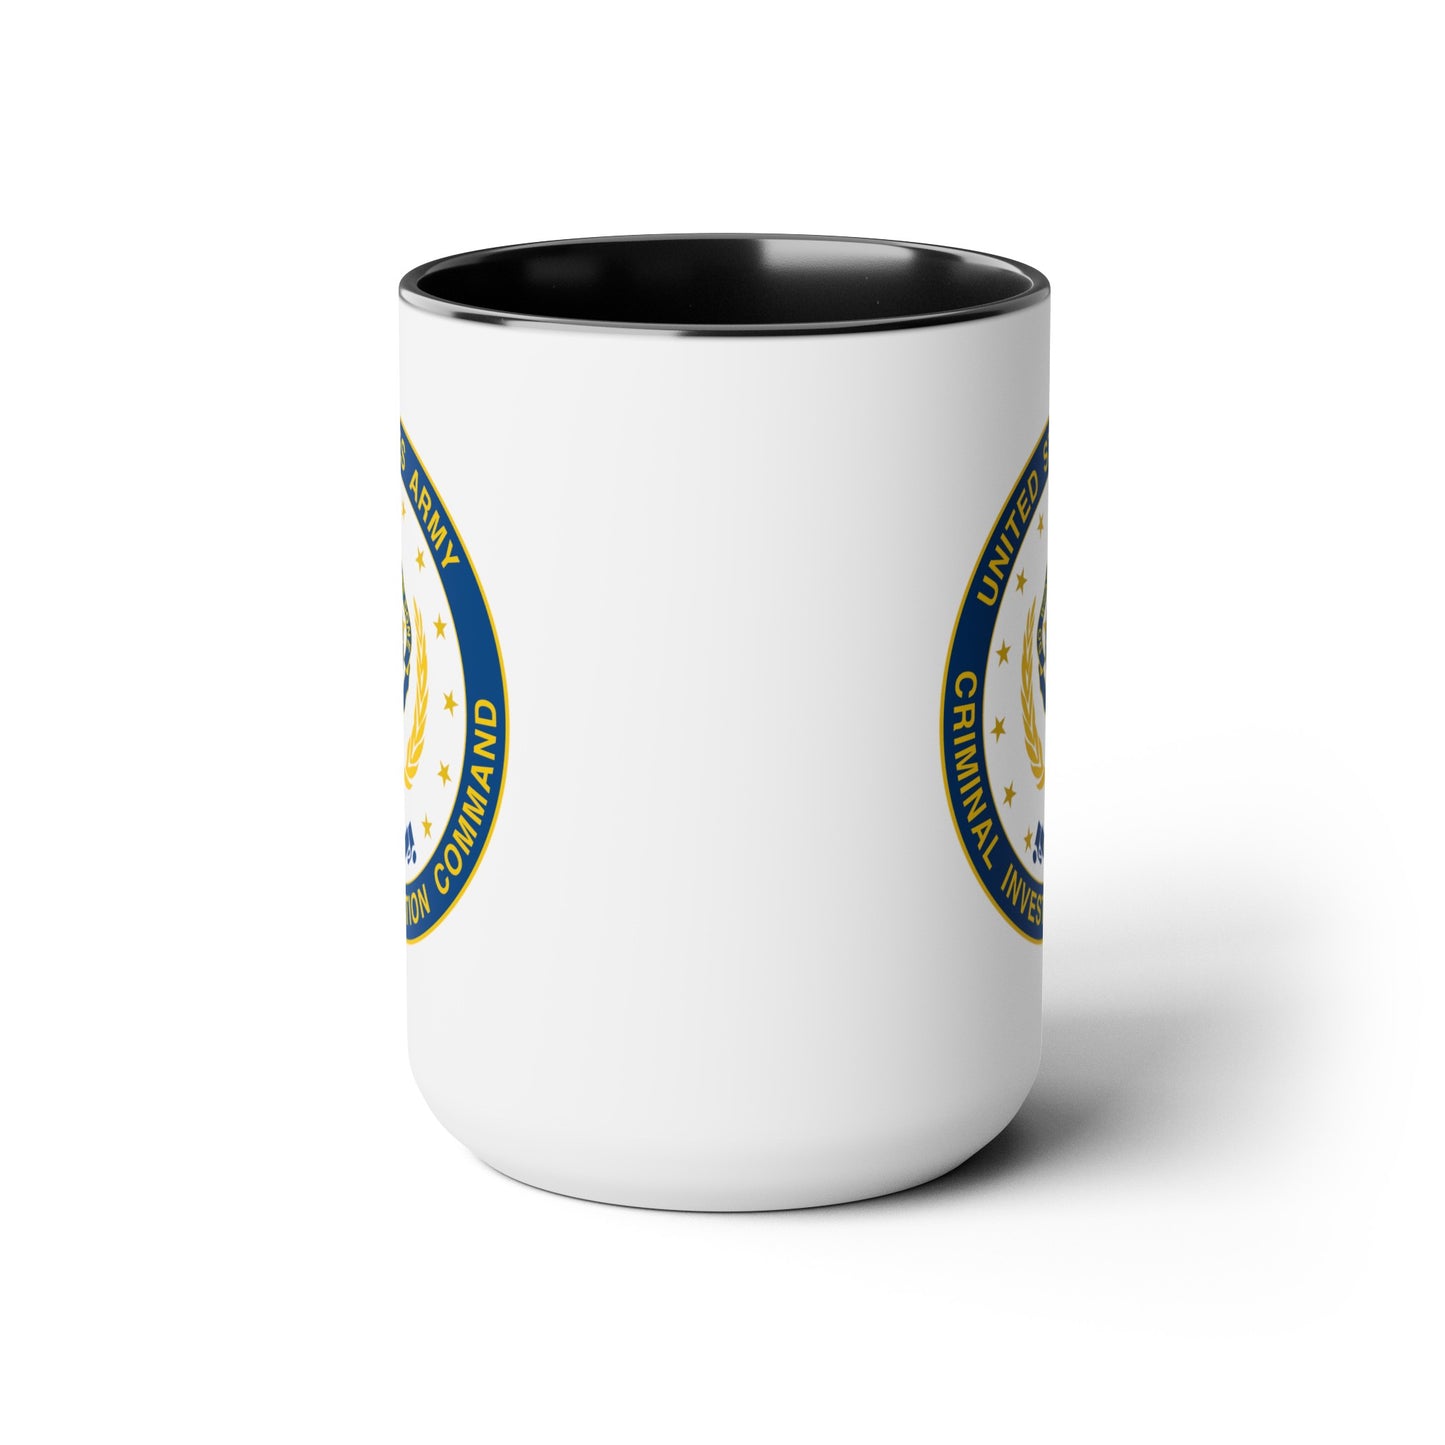 Army CIC Seal Coffee Mug - Double Sided Black Accent White Ceramic 15oz by TheGlassyLass.com